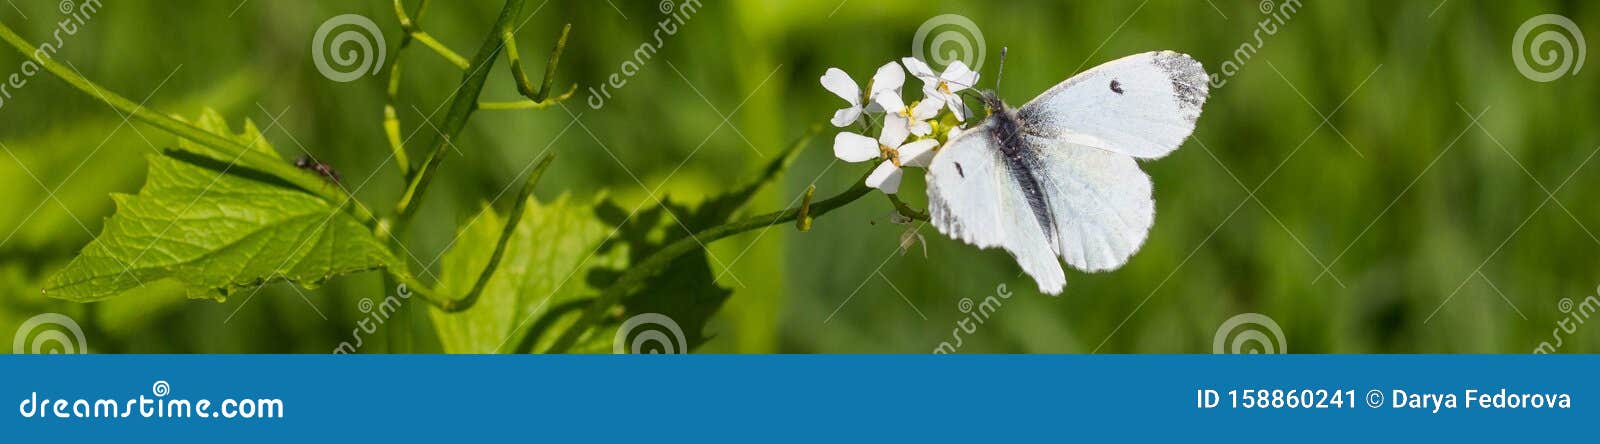 banner of white butterfly on an little white flower